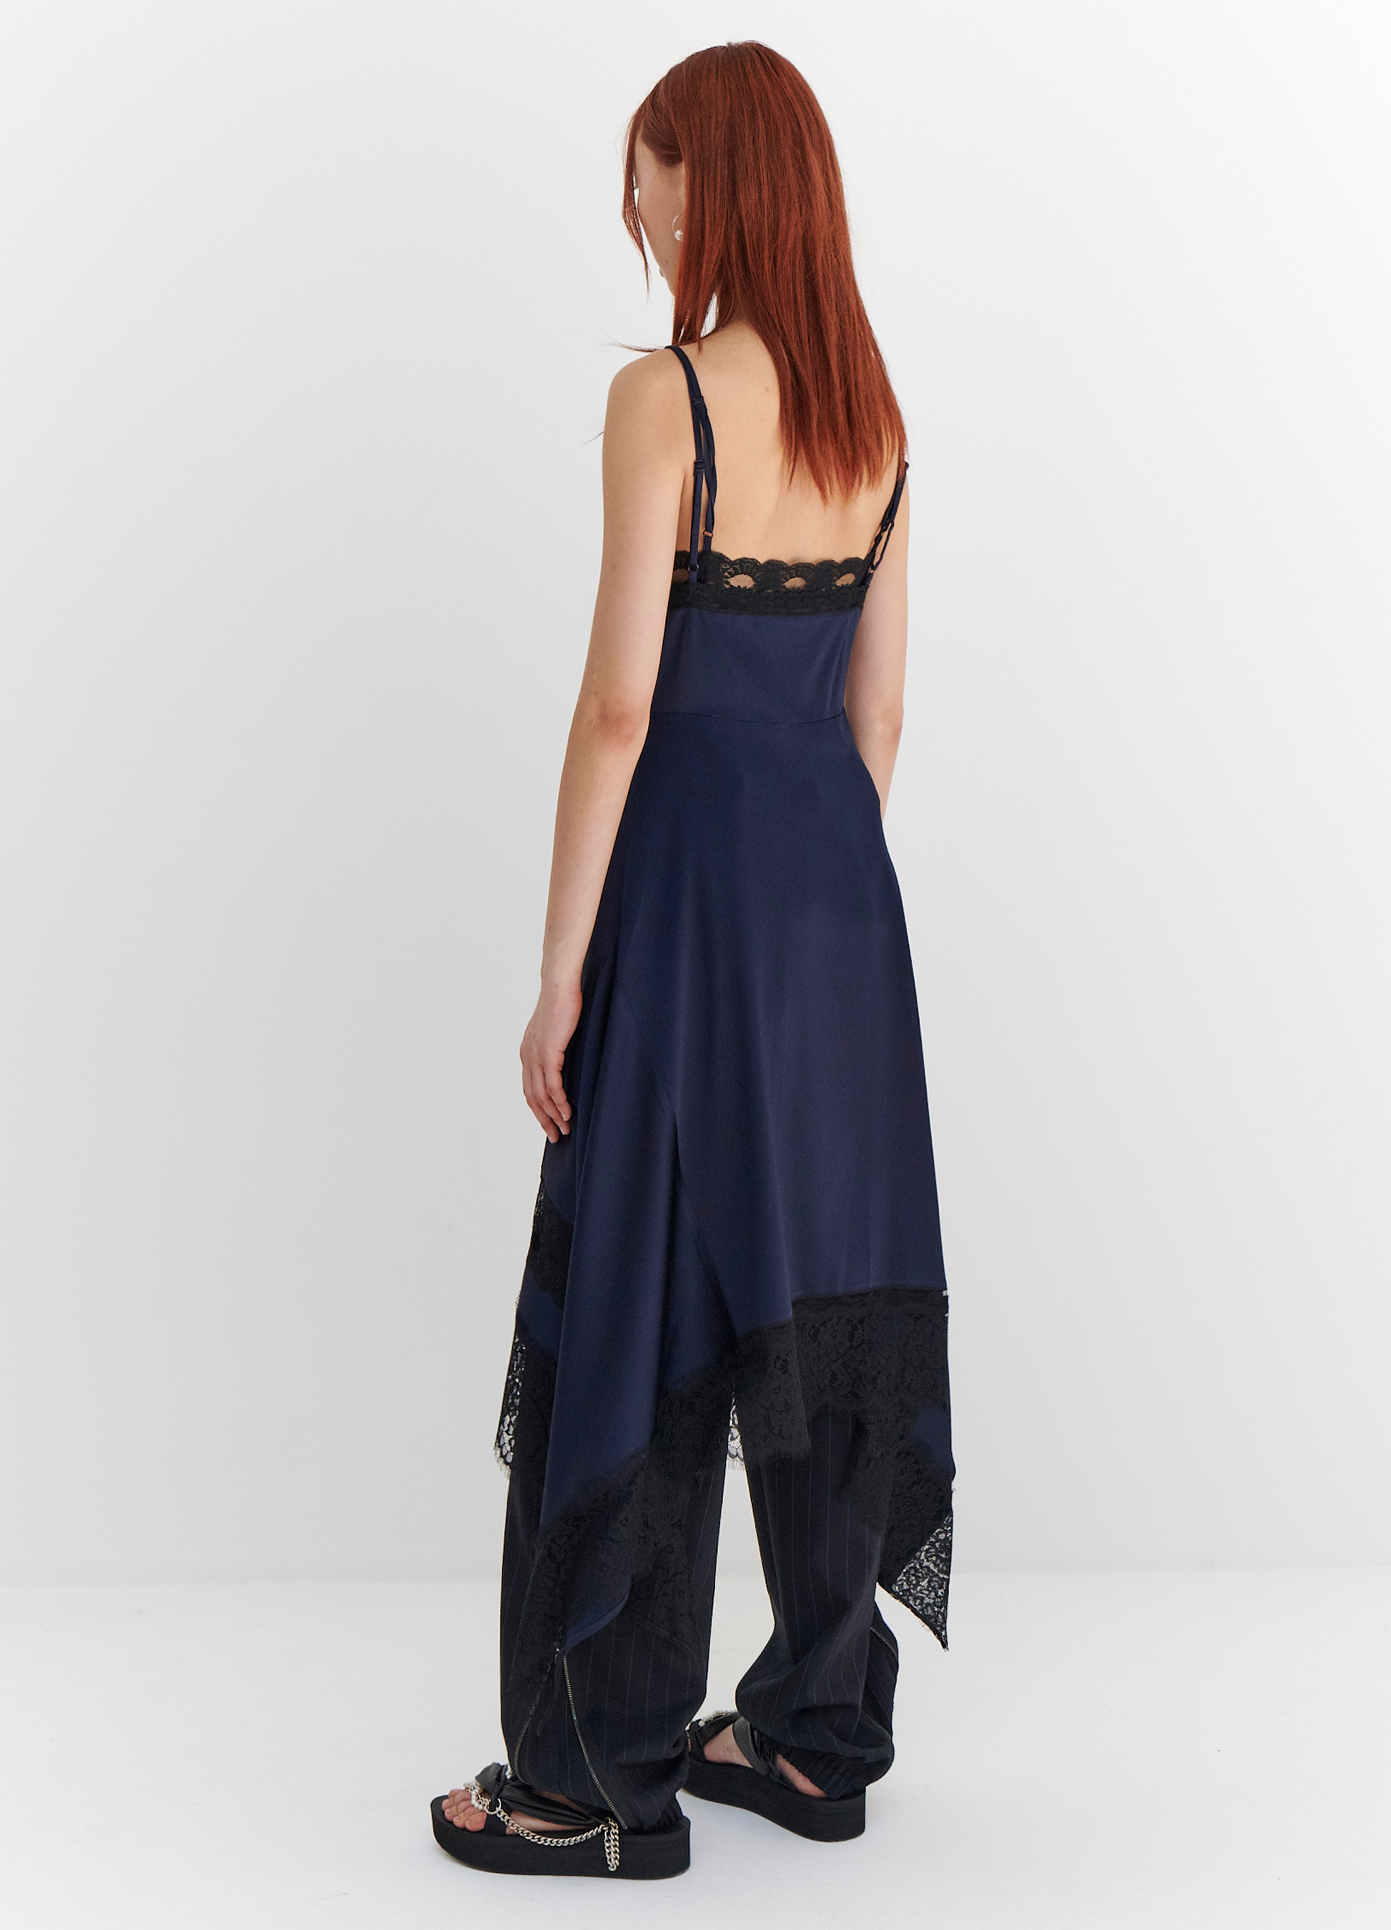 MONSE Lace Trim Slip Dress in Midnight on model full back side view